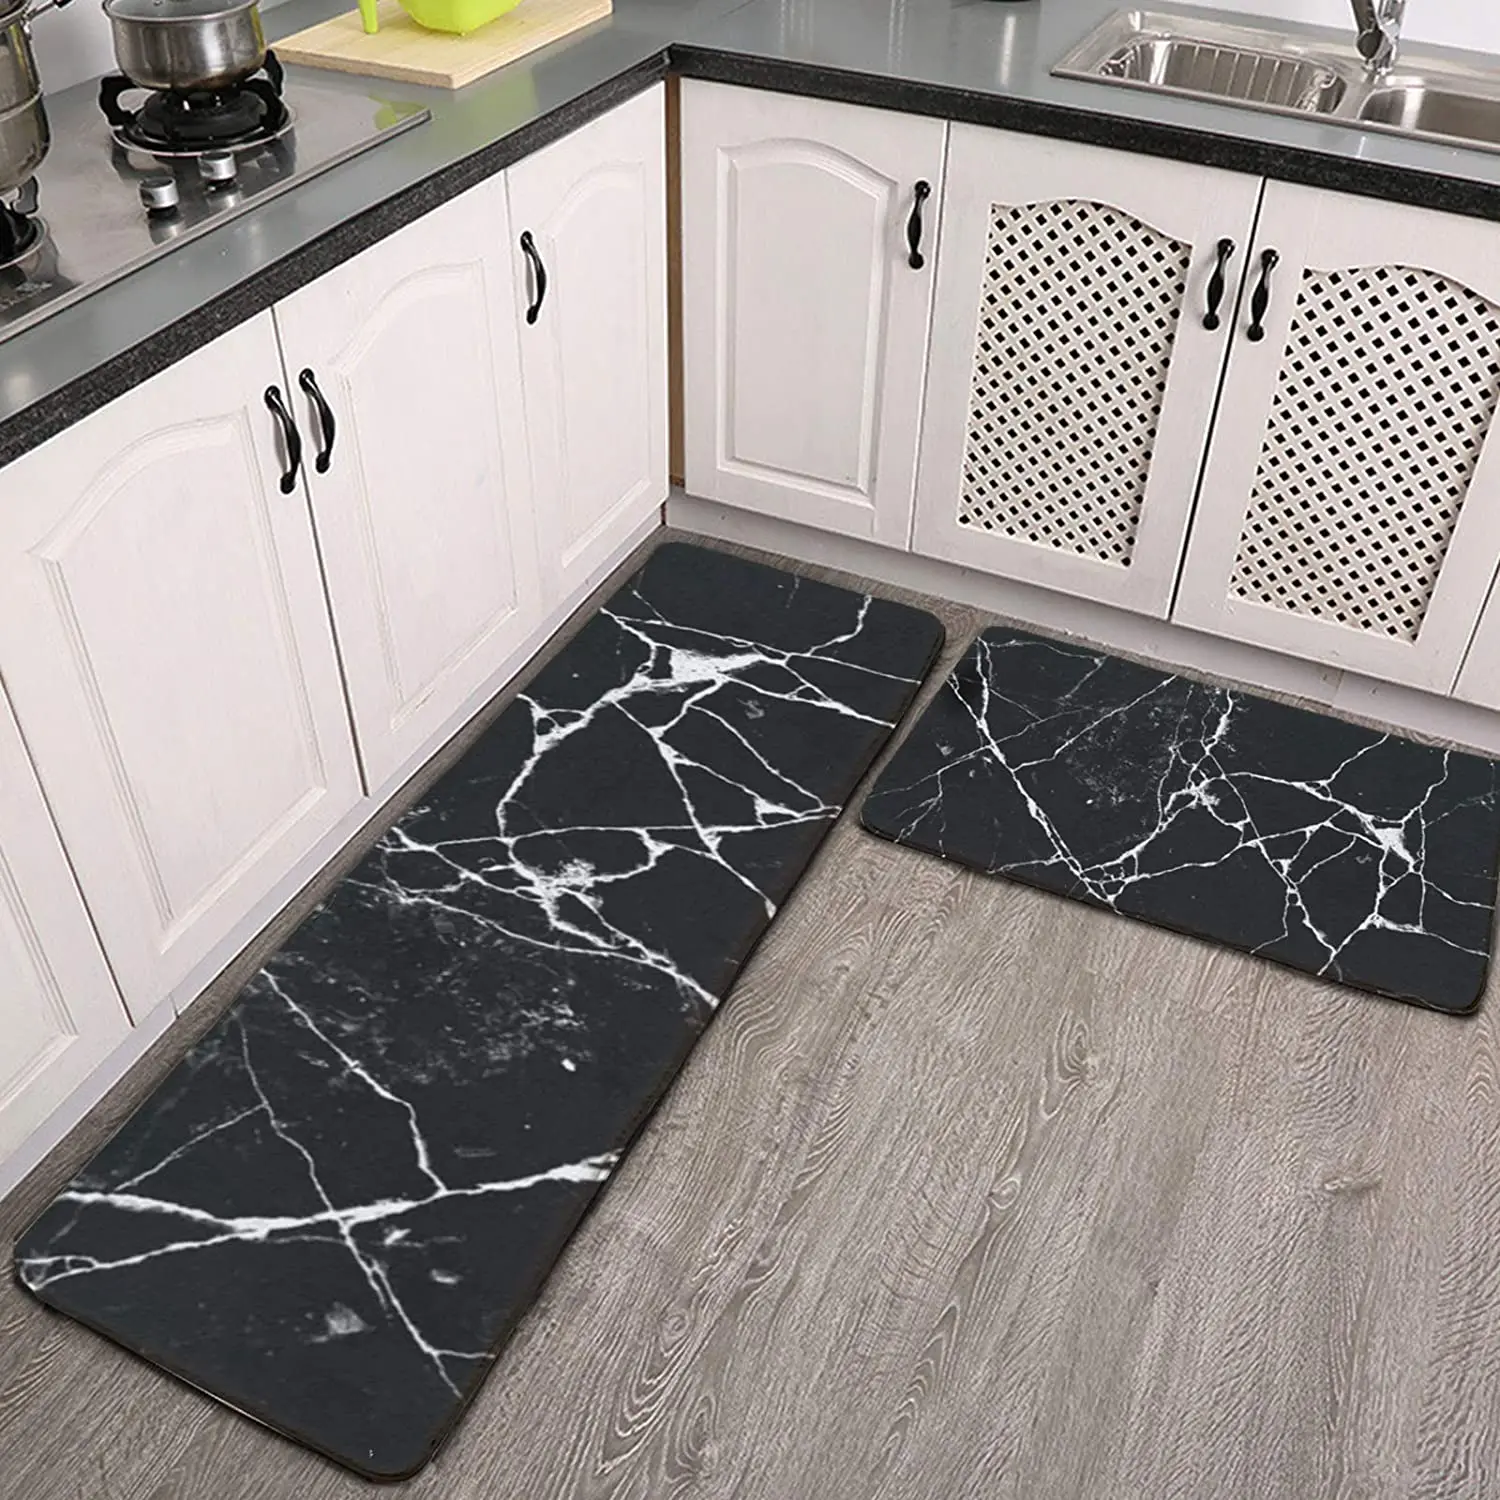 

Kitchen Mat Set of 2 Black and White Marble Anti Fatigue Soft Kitchen Rugs Non-Slip Comfort Floor Mats Runner Area Rug Carpet